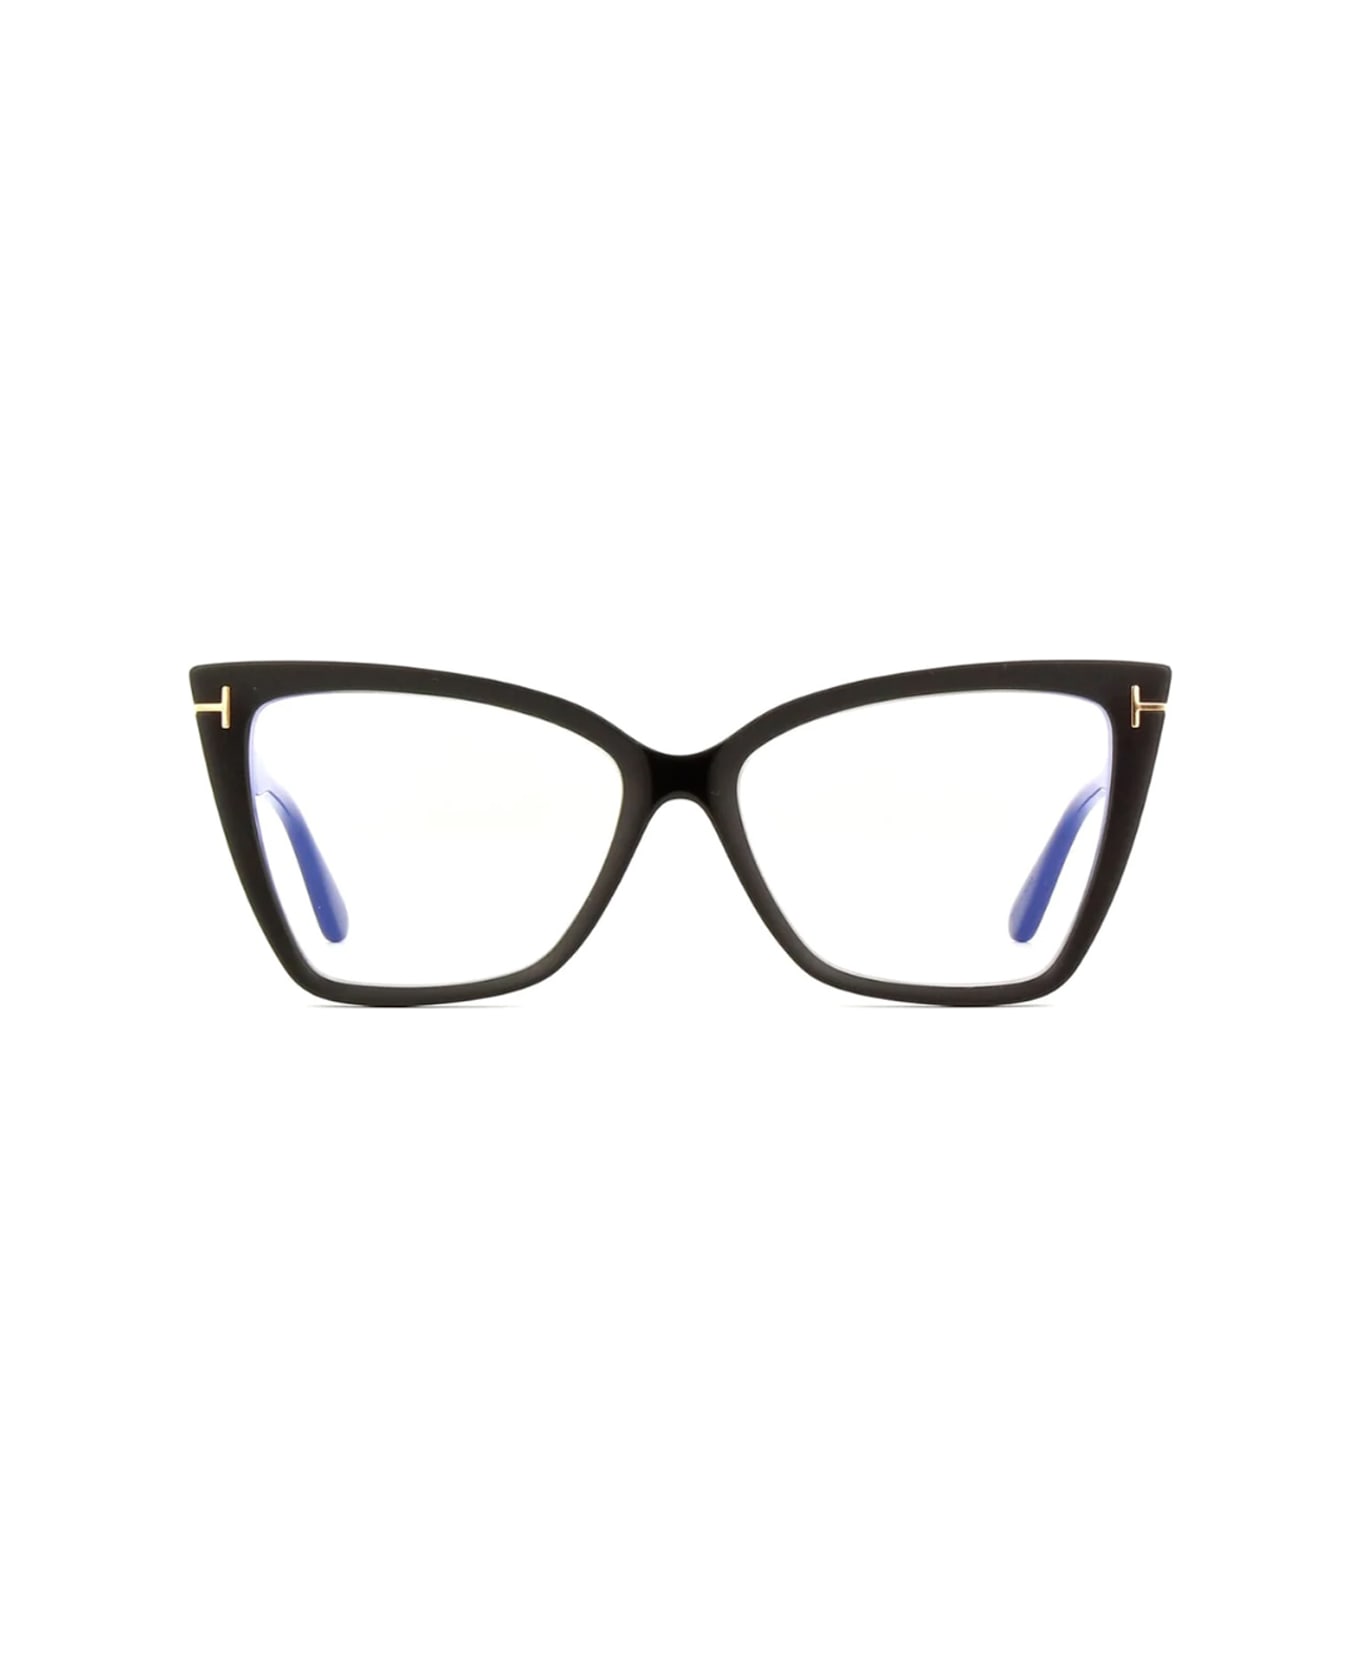 Tom Ford Eyewear Ft5844 001 Glasses - Nero